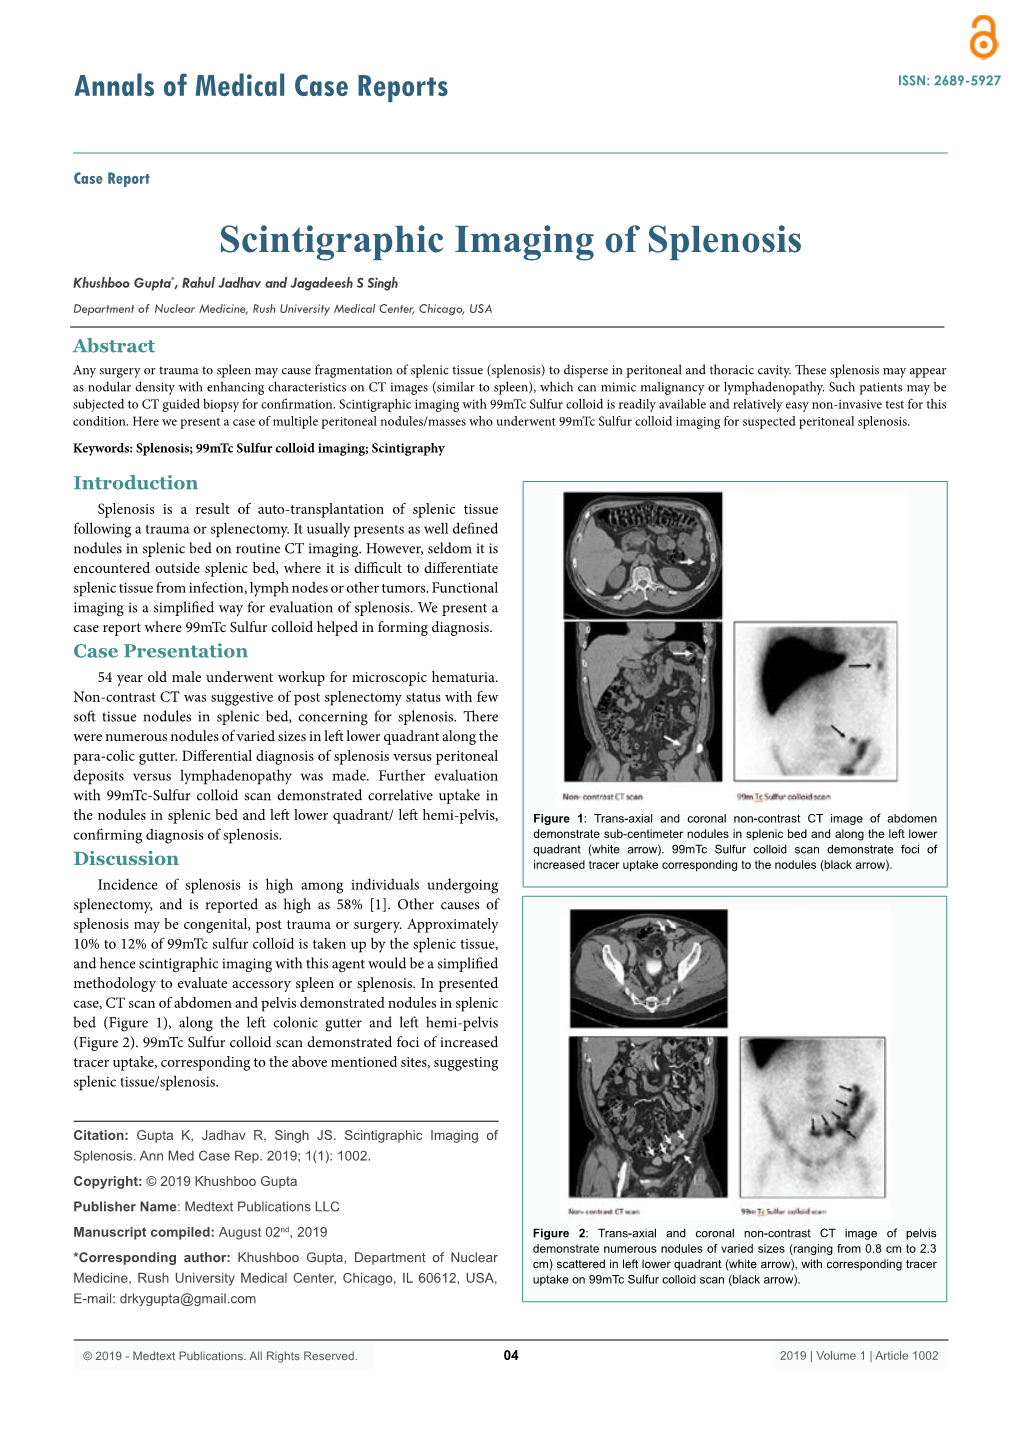 Scintigraphic Imaging of Splenosis Khushboo Gupta*, Rahul Jadhav and Jagadeesh S Singh Department of Nuclear Medicine, Rush University Medical Center, Chicago, USA